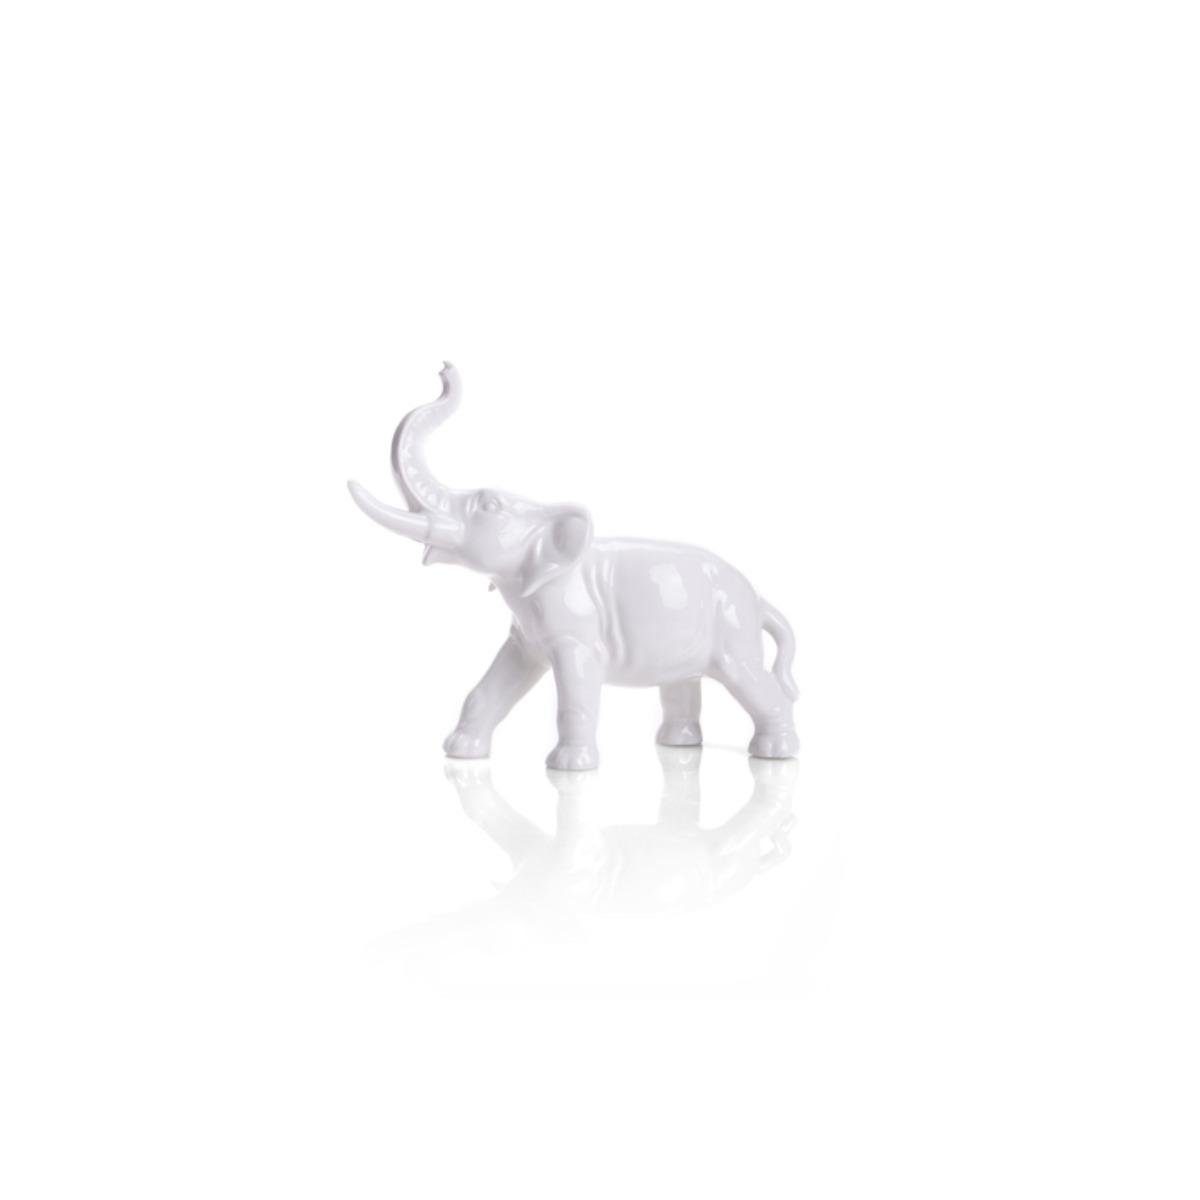 Wagner & Apel Porzellan Dekofigur 1261 W - Porzellan - Elefant, klein (1tlg), Perfekt für jeden Anlass